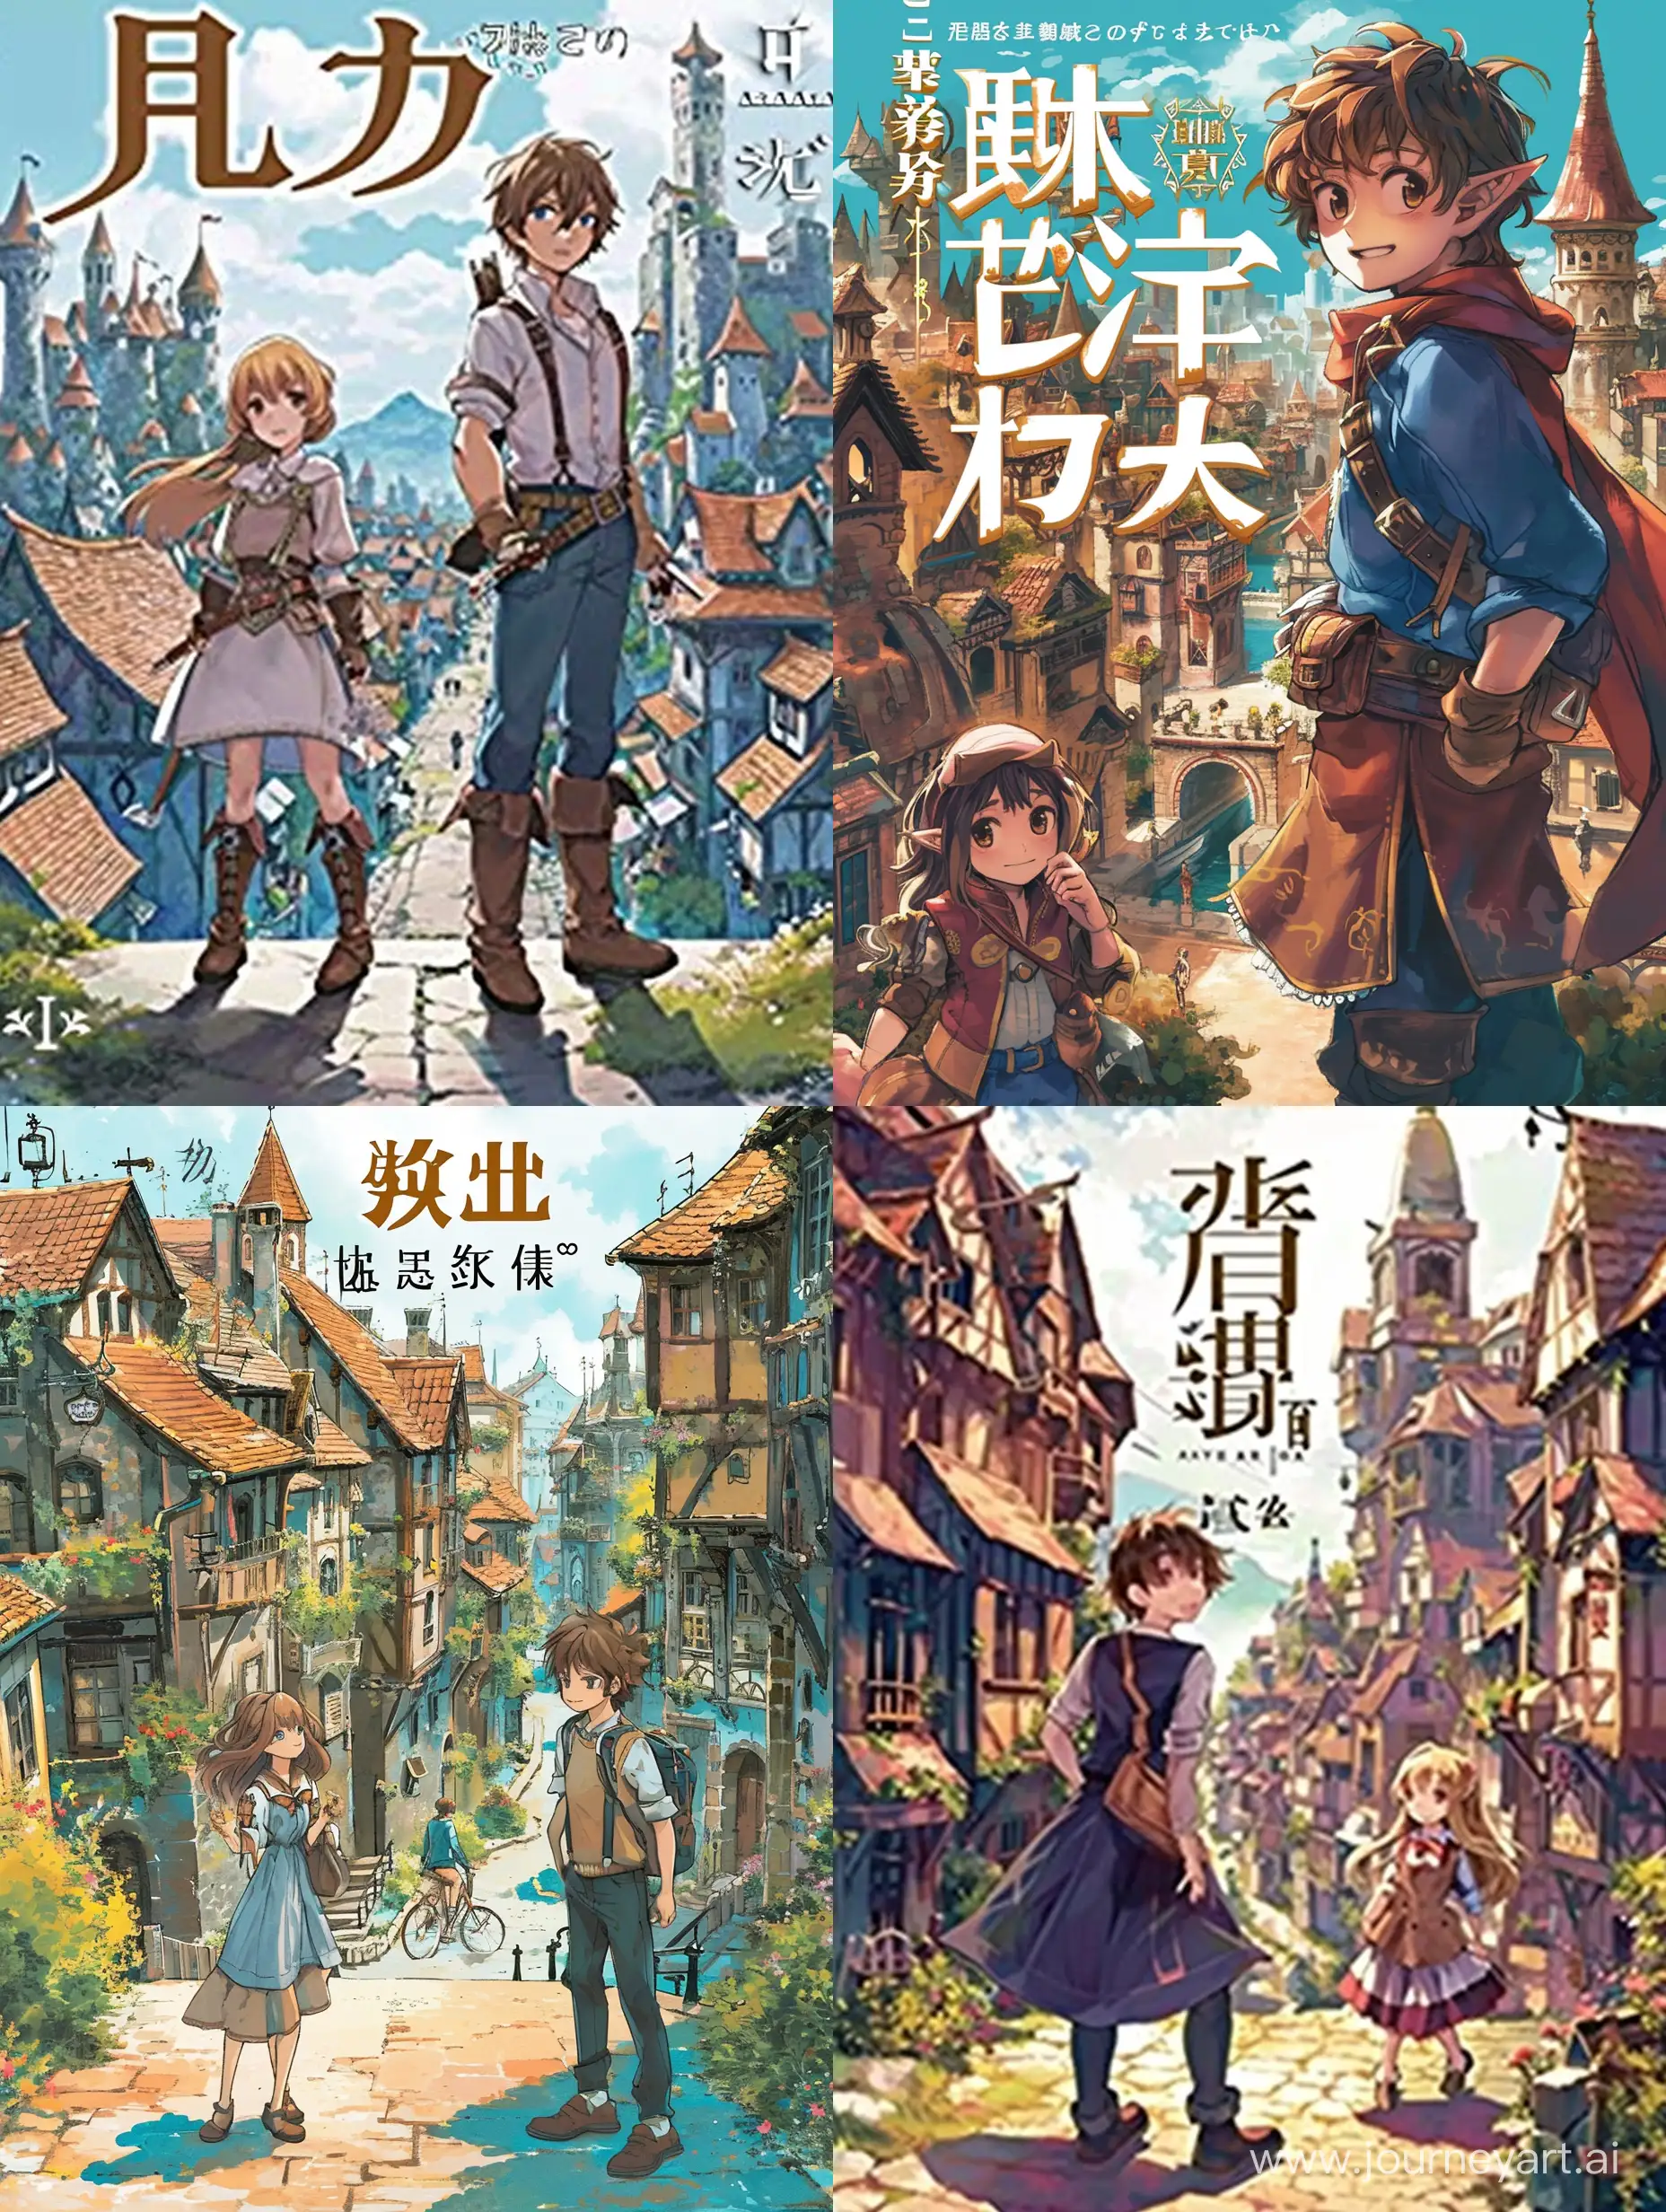 Fantasy-City-Adventure-of-a-Boy-and-Girl-Enchanting-Light-Novel-Cover